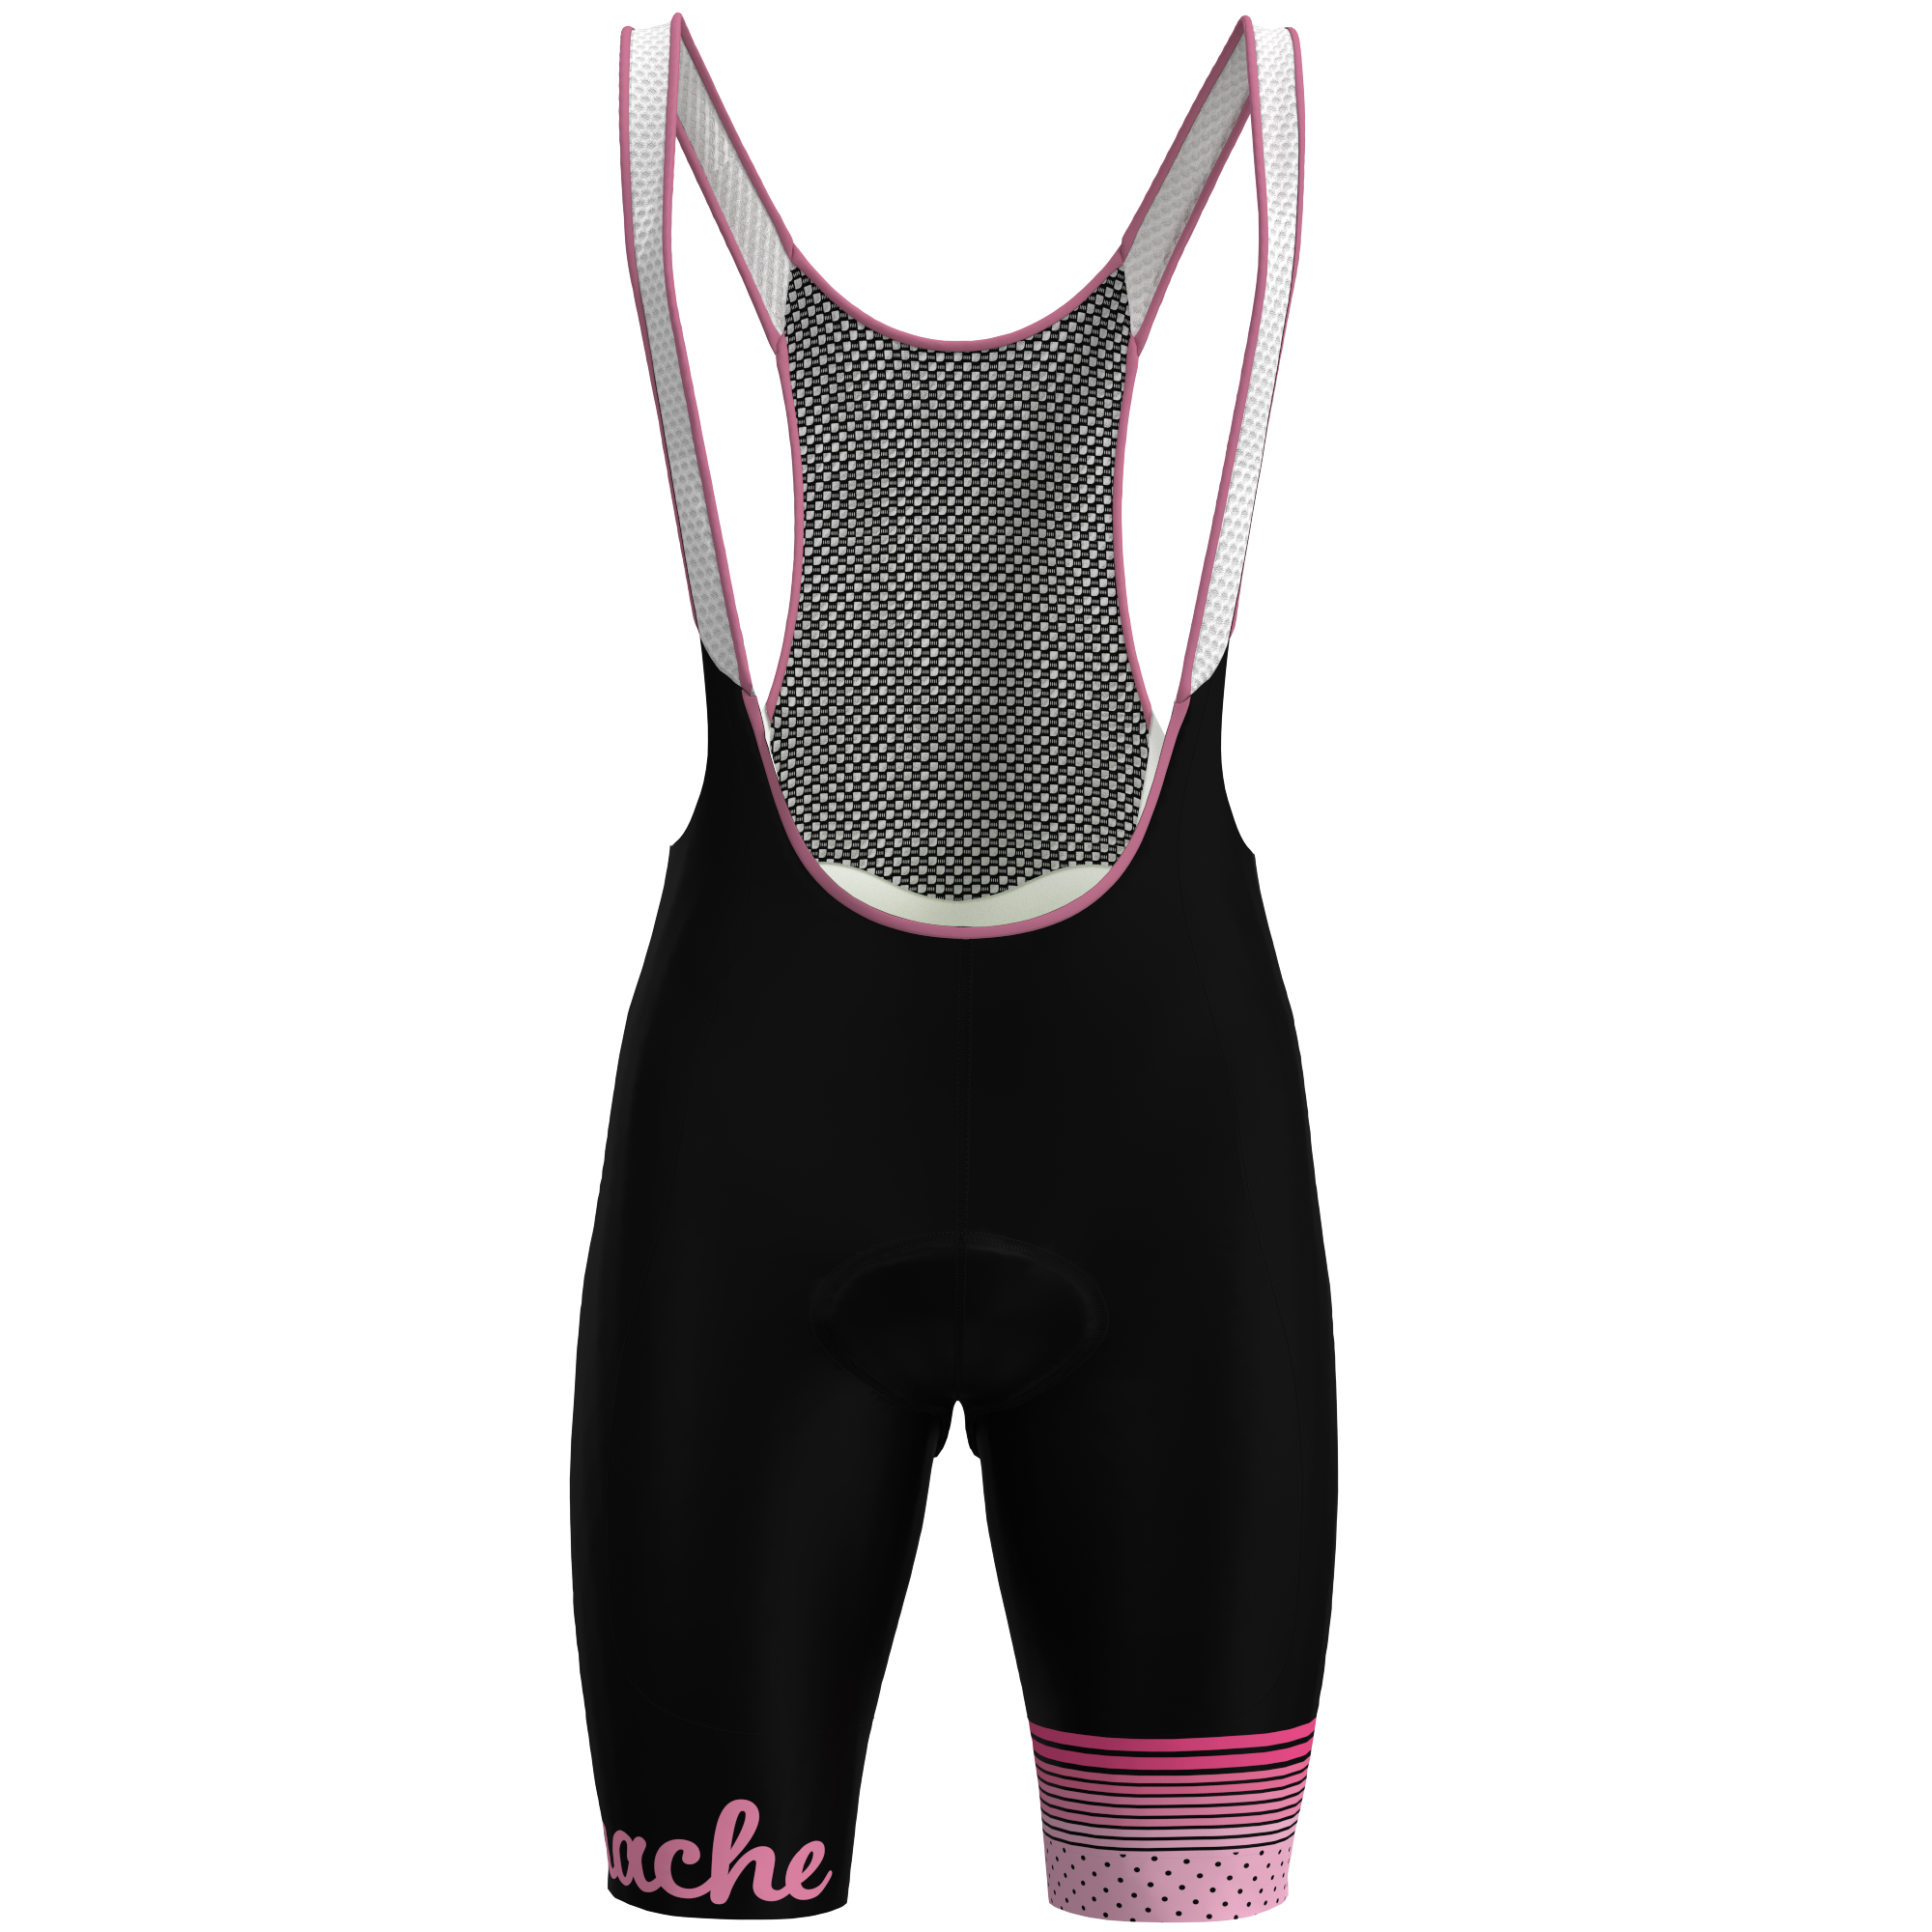 Women's WT 2ND SKIN Bib Short - Pink Branded